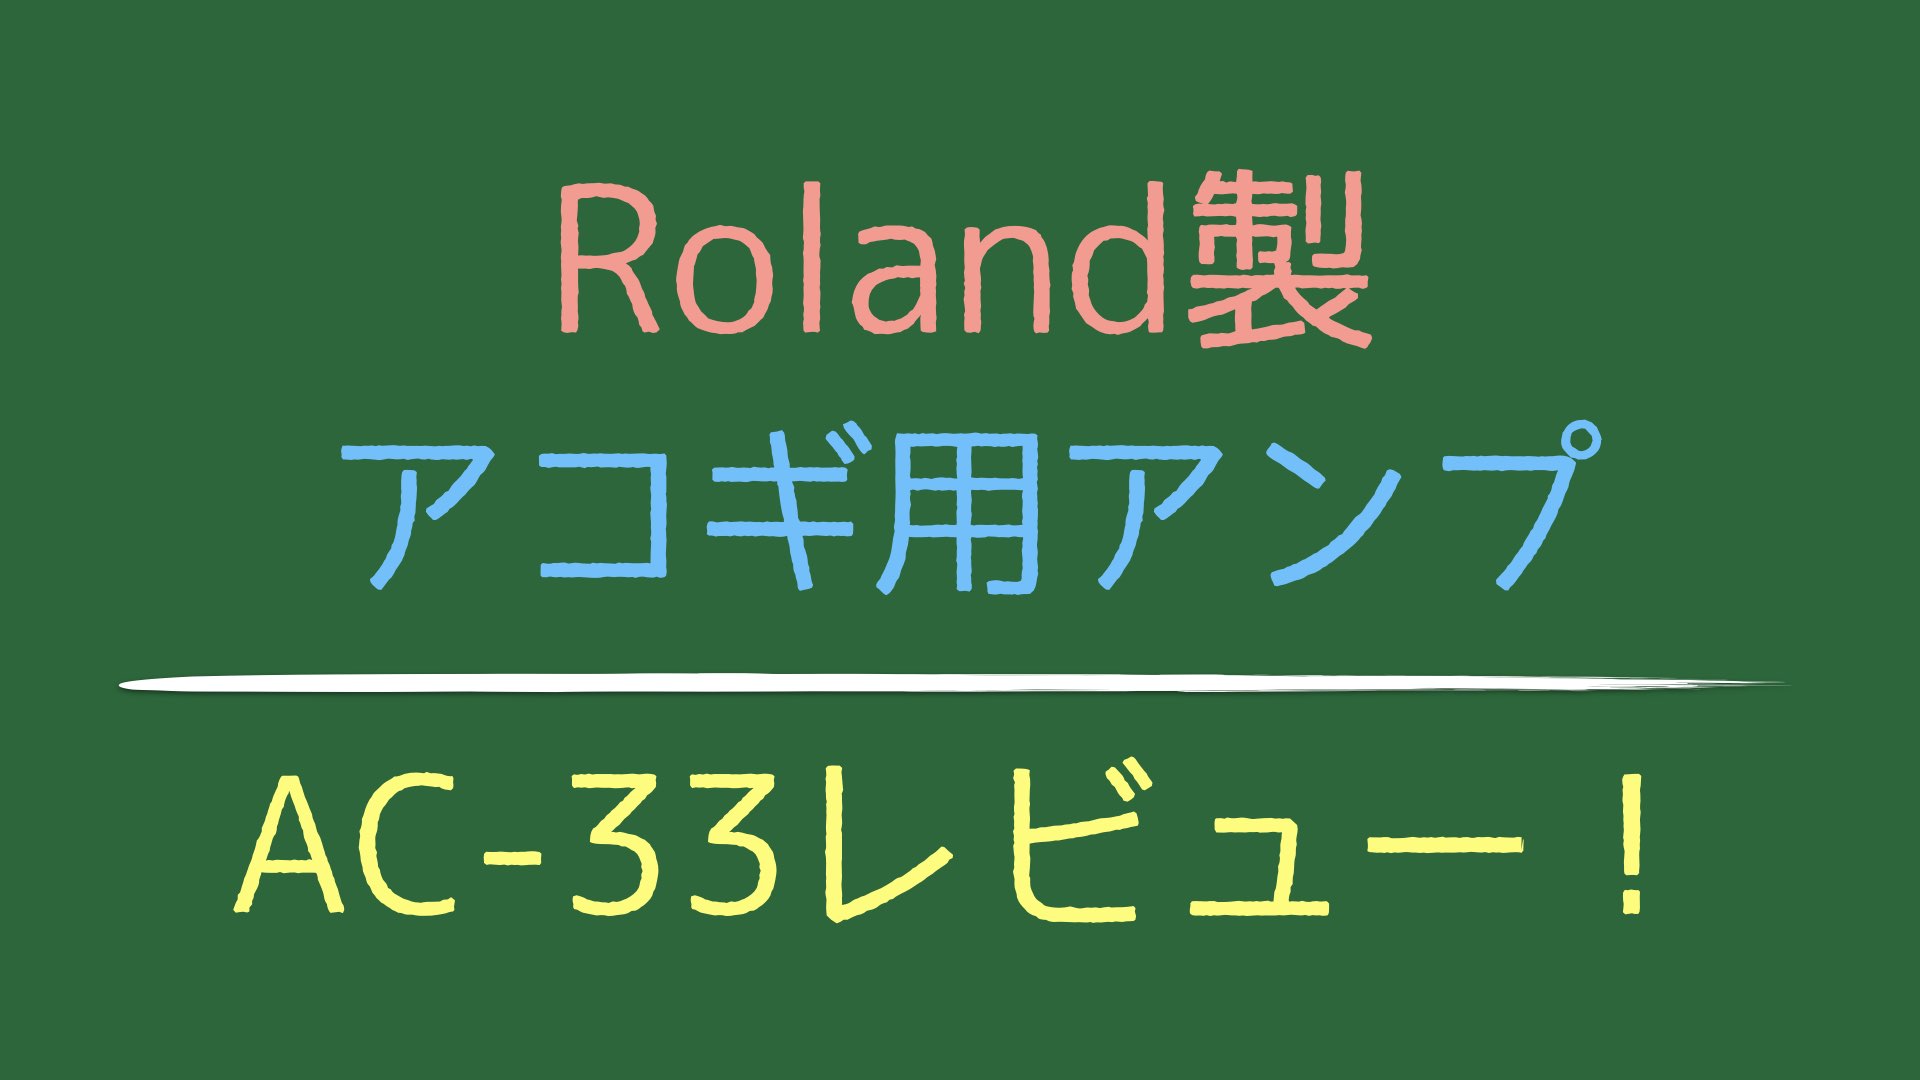 AC-33／Roland のレビュー！〜アコギ(エレアコ)用アンプおすすめモデル 